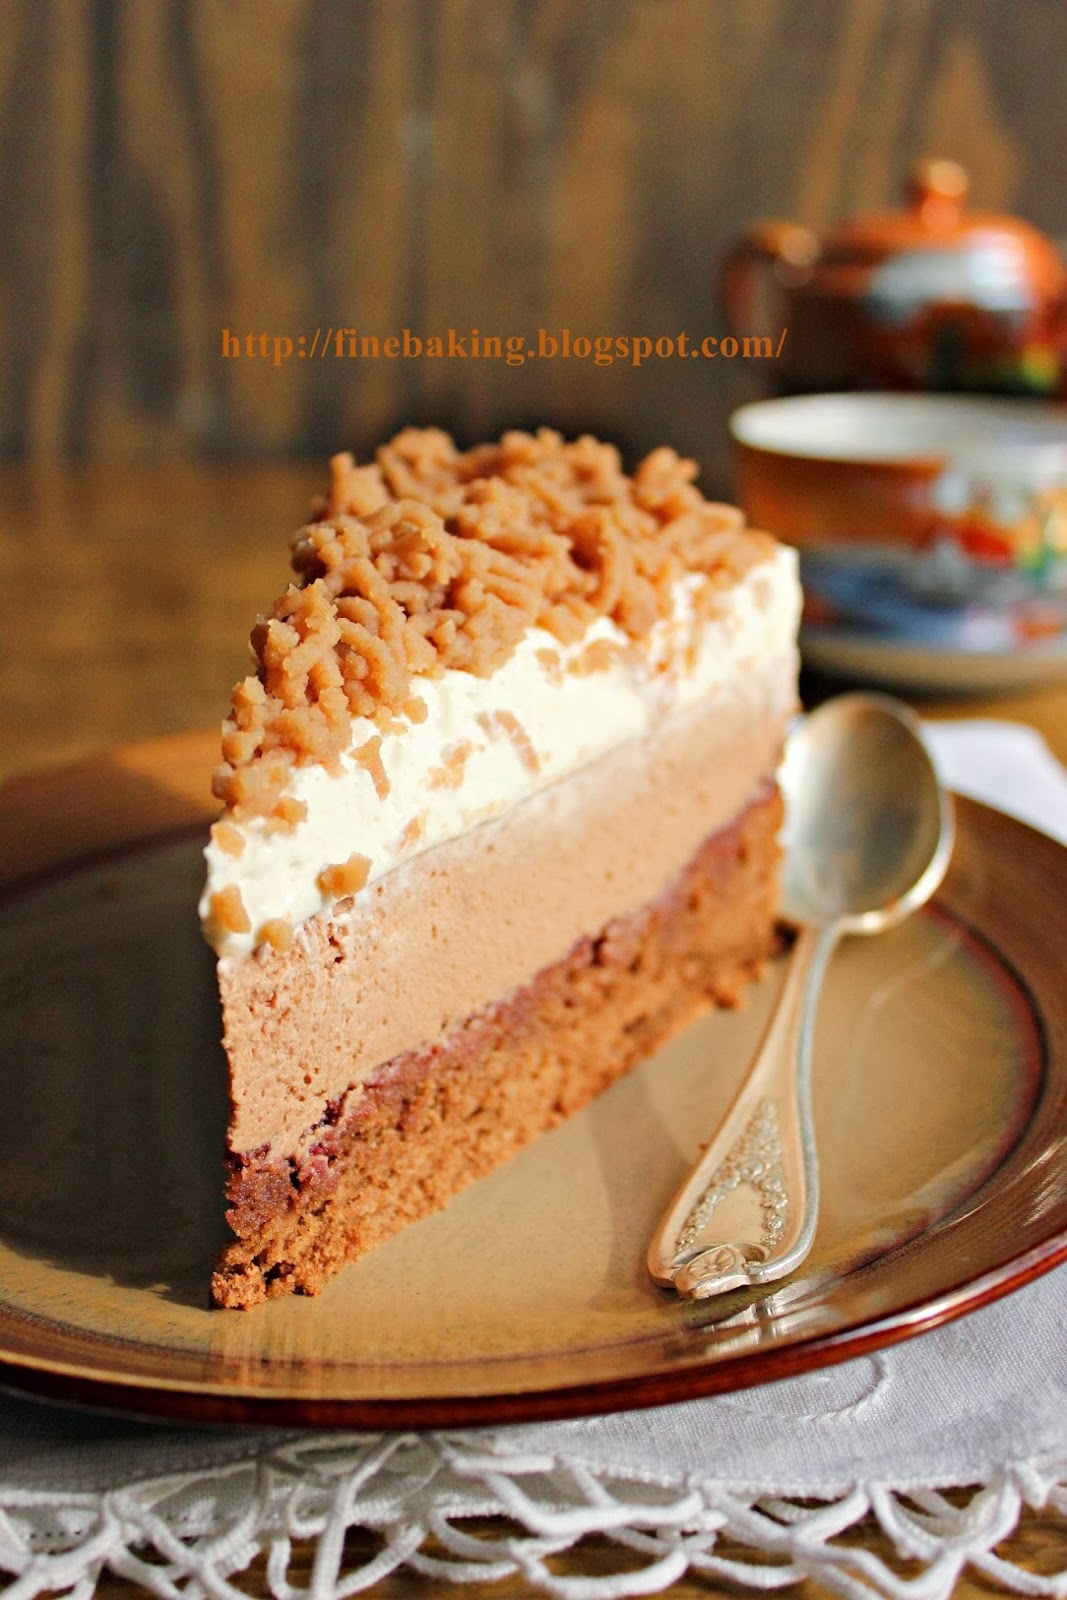 Chocolate dust: Chestnut cream cake